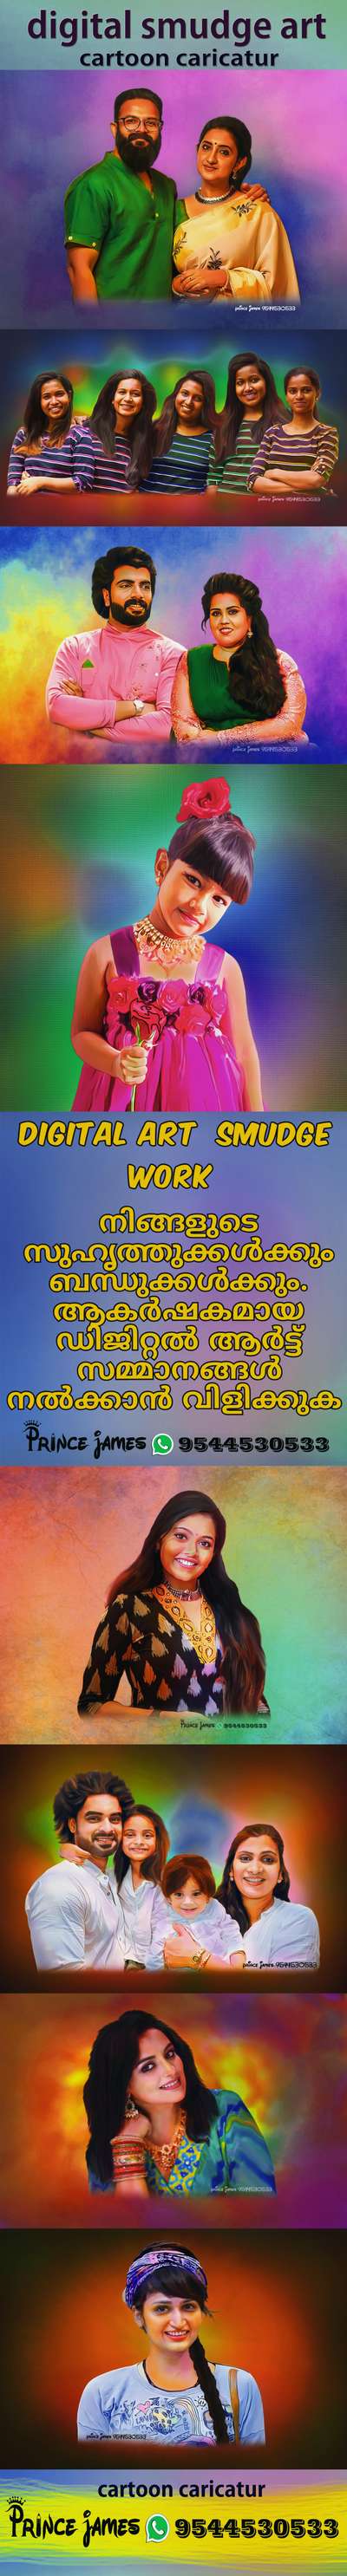 digital smudge art works. നിങ്ങളുടെ ചുമരുകളിലെ  ഫോട്ടോ ഫ്രെയിംസ് മനോഹരമാക്കാൻ  whatsapp:9544530533